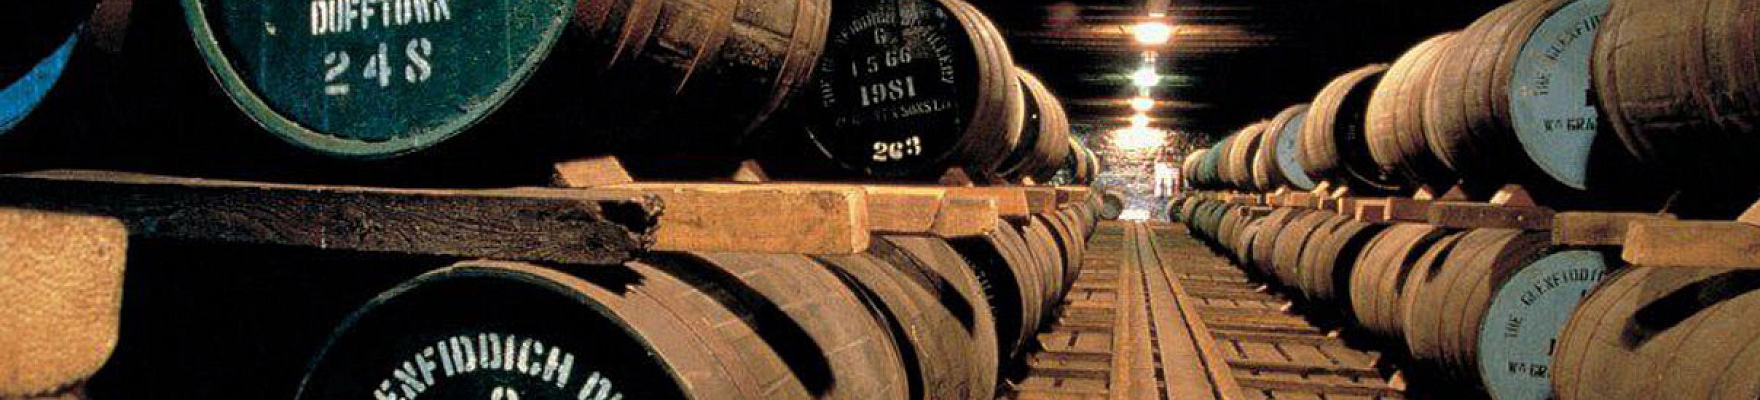 The Glenfiddich Distillery